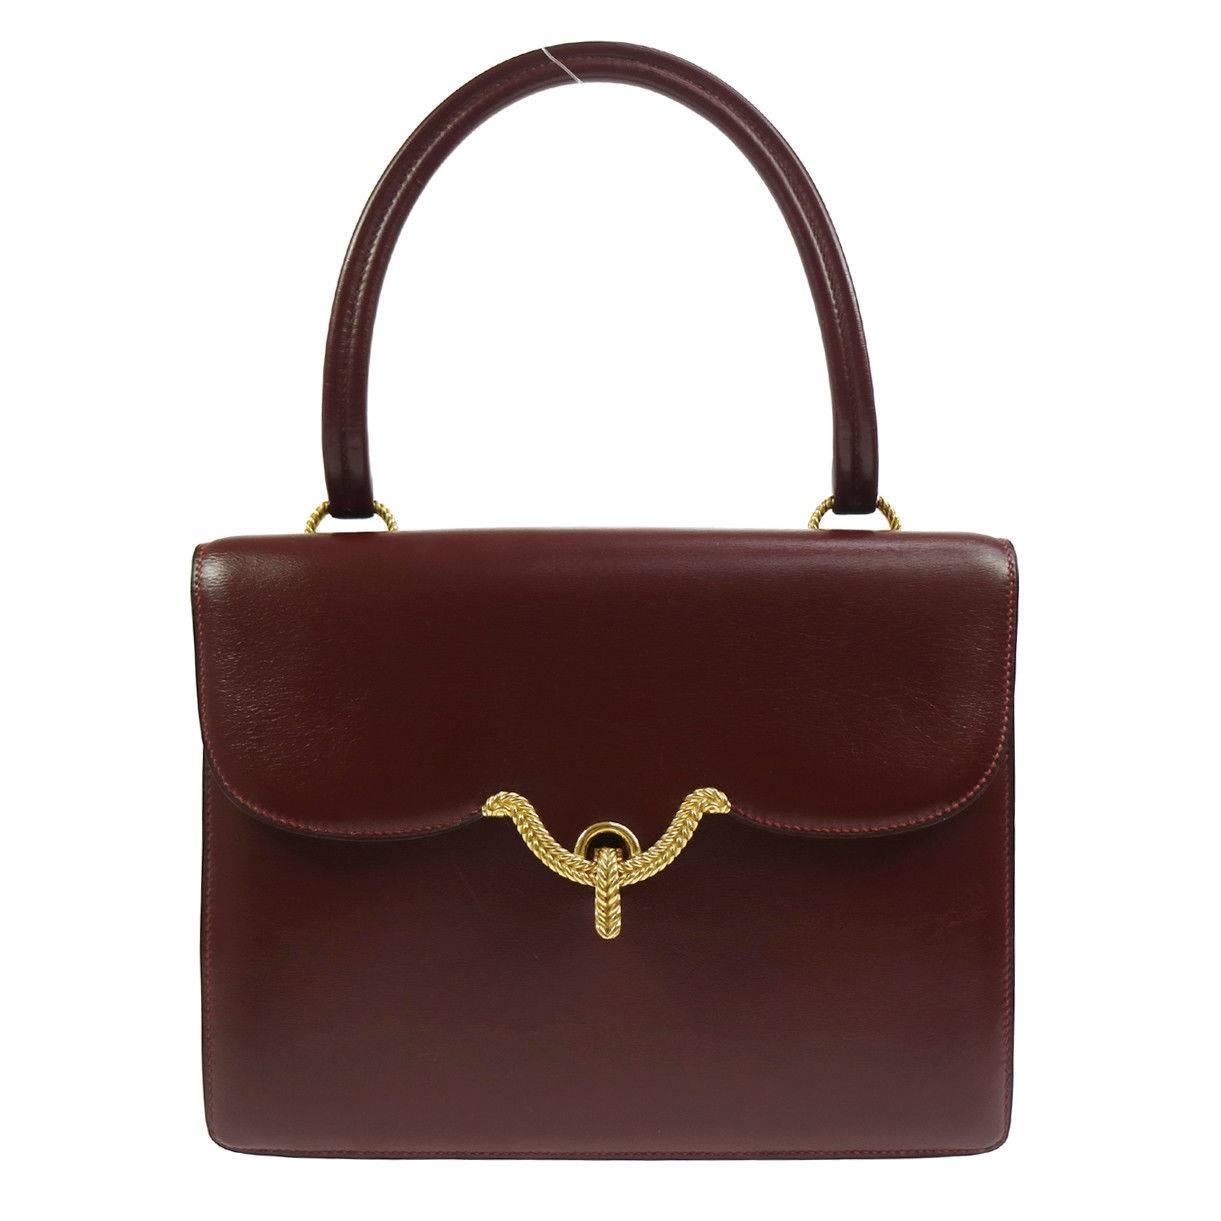 Hermes Bordeaux Leather Gold Emblem Kelly Style Top Handle Satchel Flap Bag